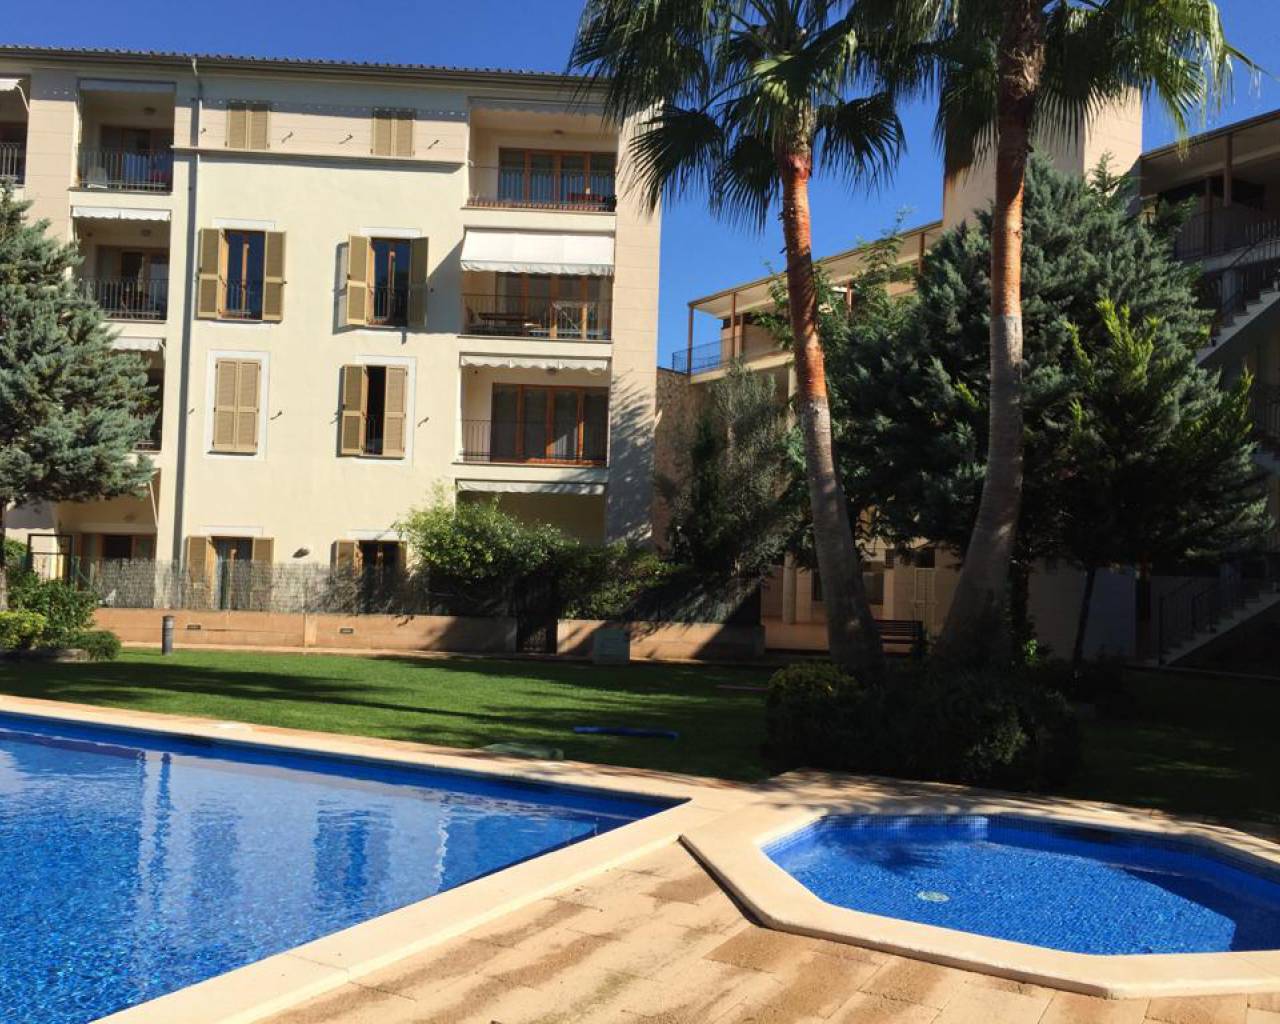 Duplex in rent in palma de Mallorca